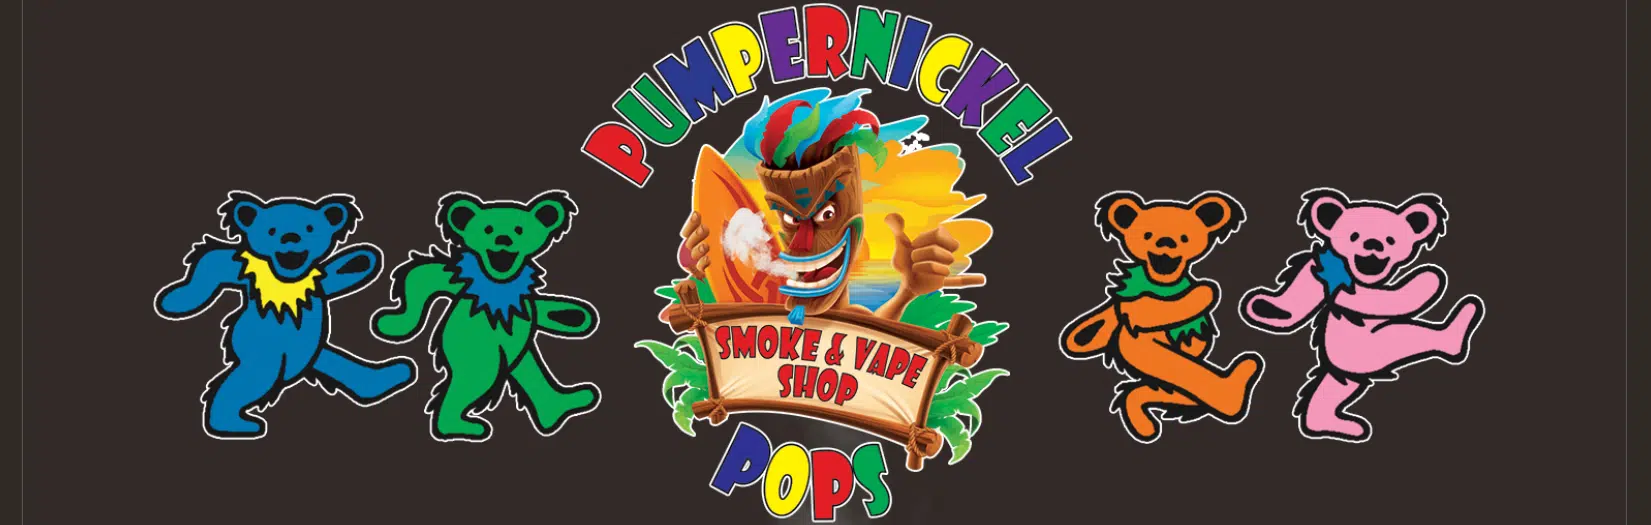 image of pumpernickel smoke shop